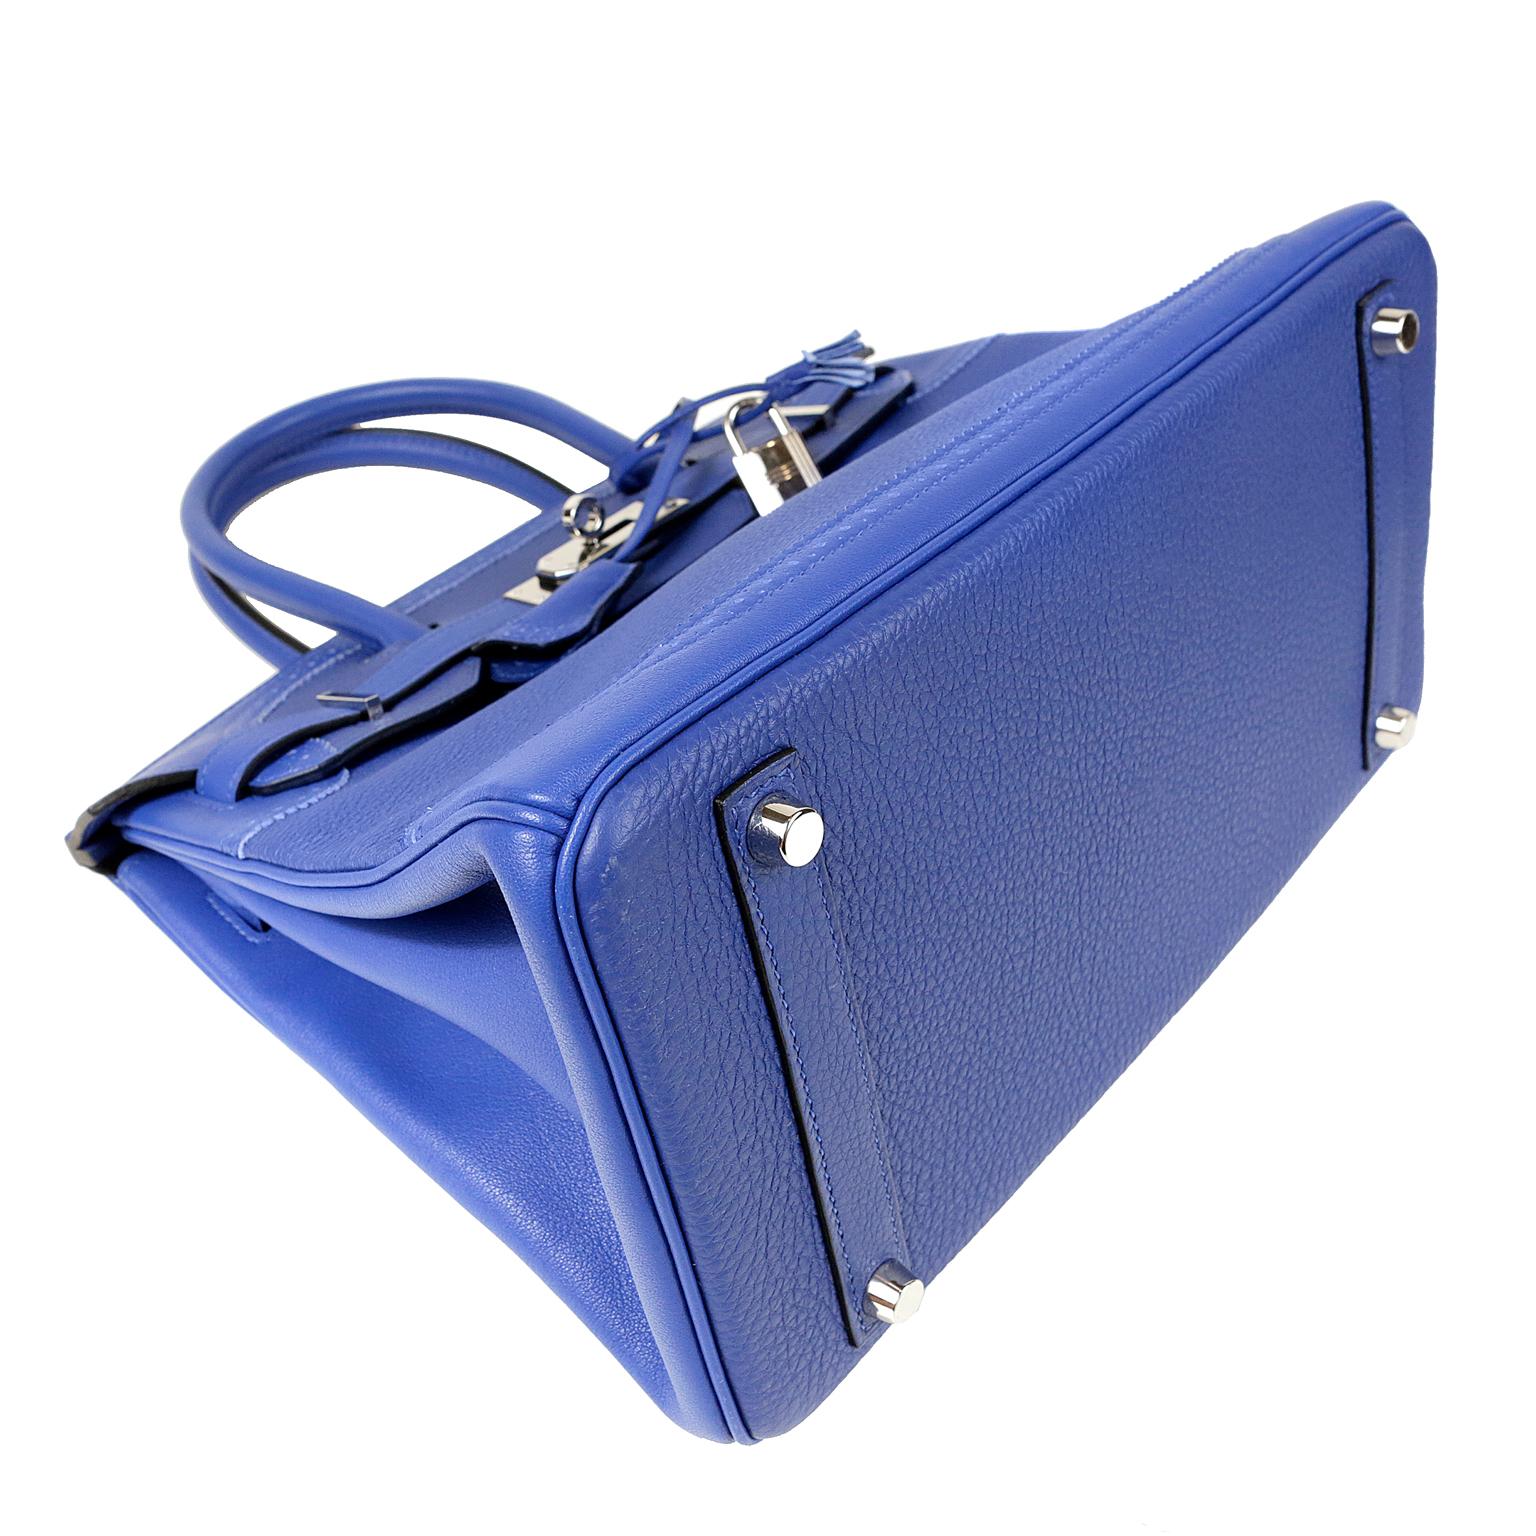 Hermès Blue Electrique Togo 30 cm Ghillies Birkin Bag 1